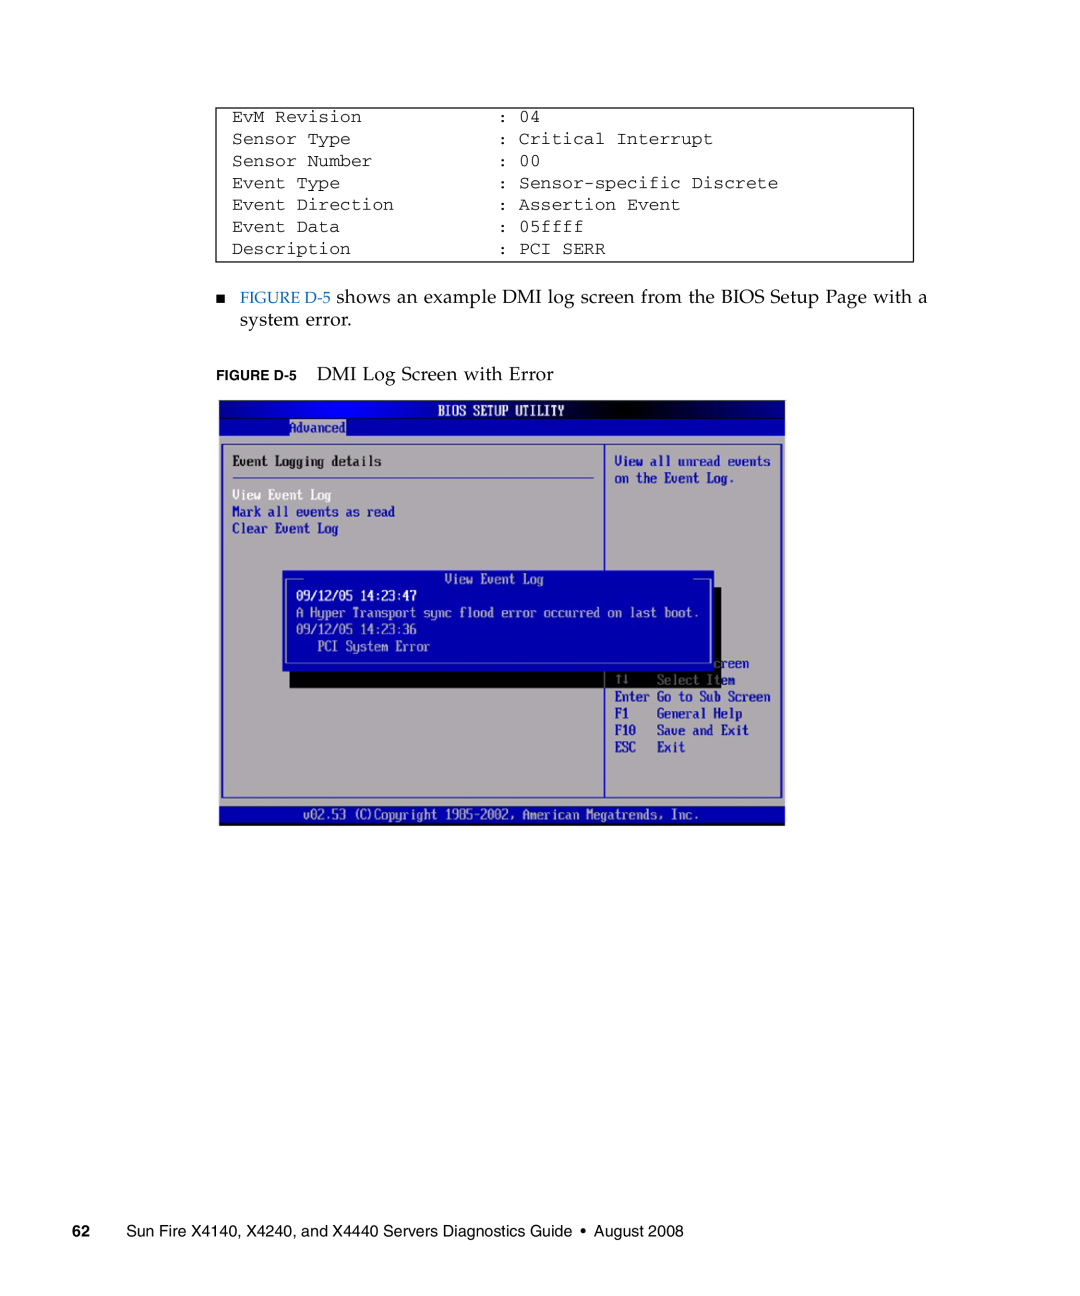 Sun Microsystems manual DMI Log Screen with Error, Sun Fire X4140, X4240, and X4440 Servers Diagnostics Guide August 